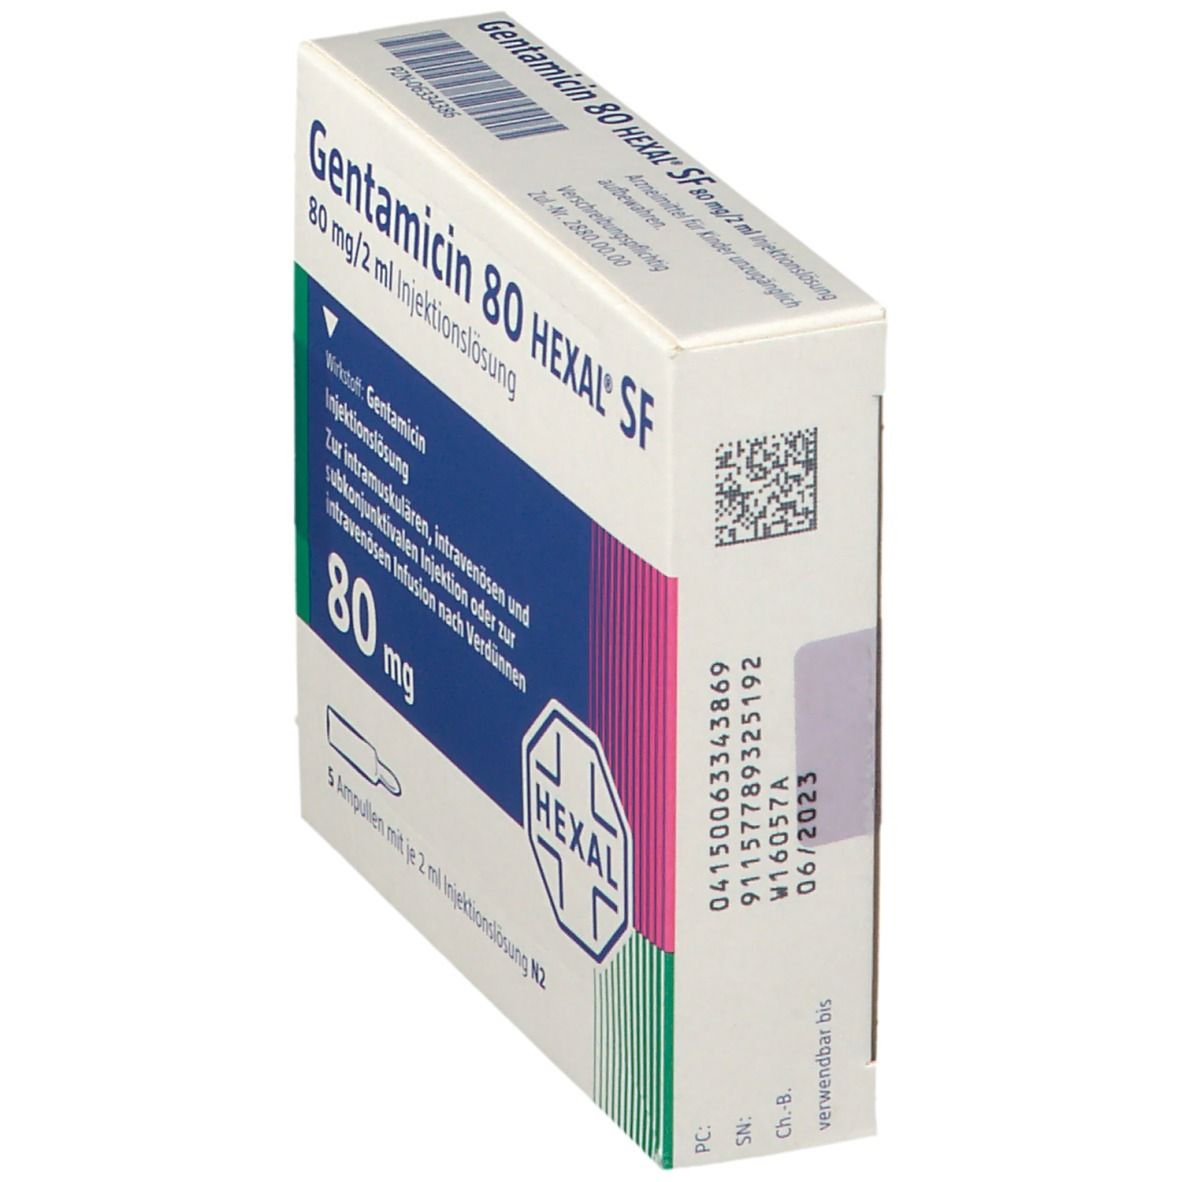 Gentamicin 80 HEXAL® SF